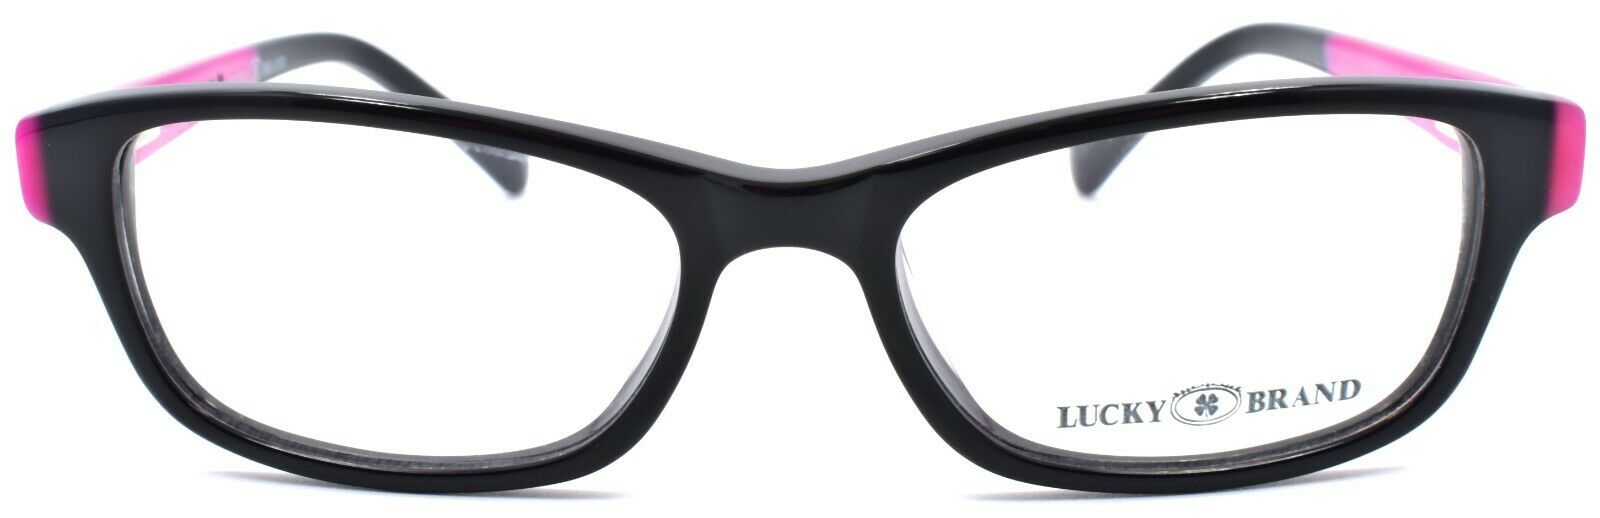 2-LUCKY BRAND Favorite Kids Eyeglasses Frames 46-15-125 Black-751286228076-IKSpecs